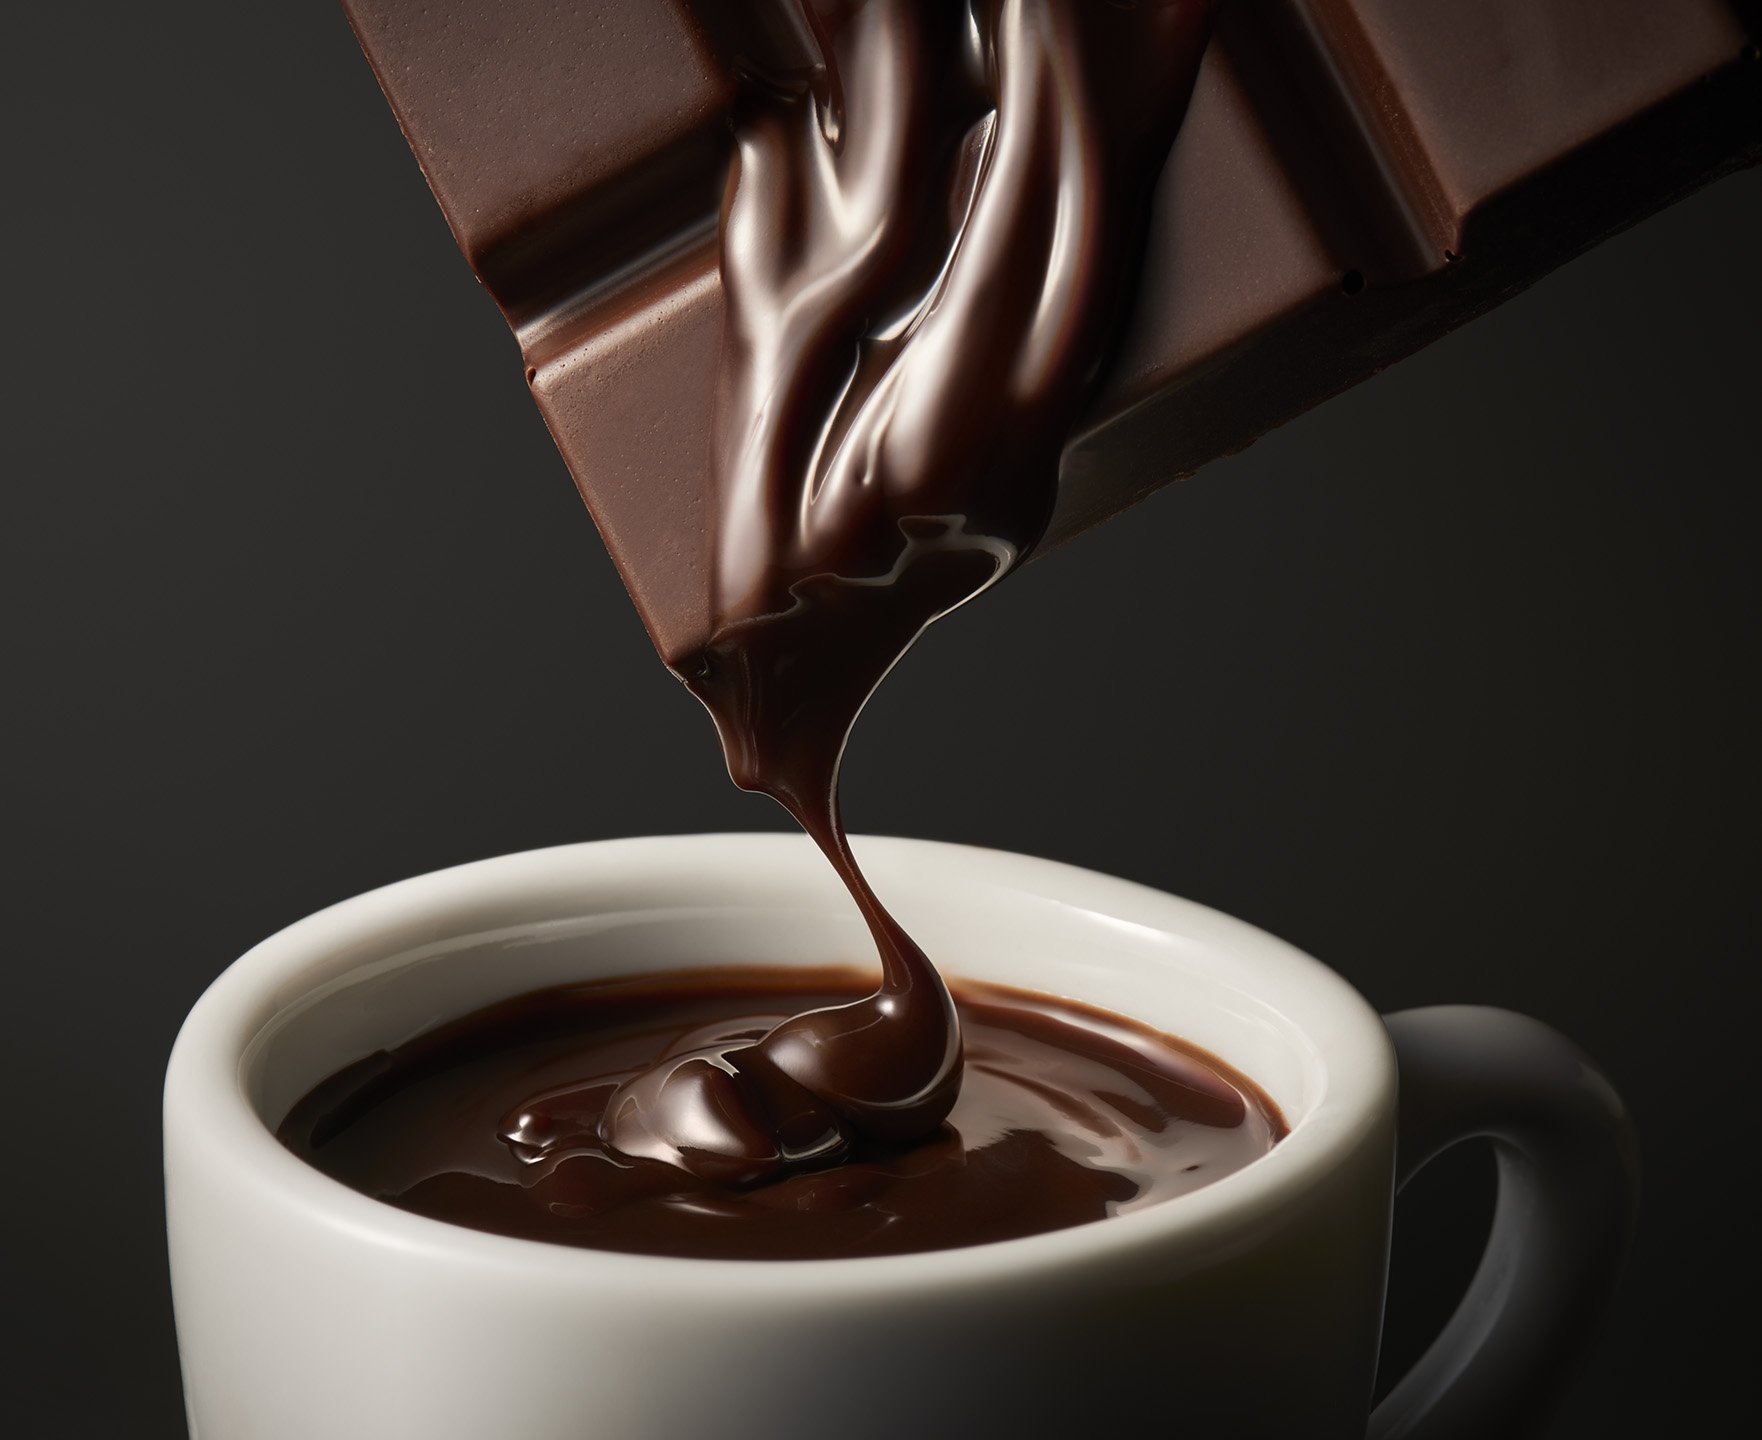 Coffee i chocolate. Горячий шоколад. Кофе и шоколад. Кофе с шоколадкой. Красивый кофе.